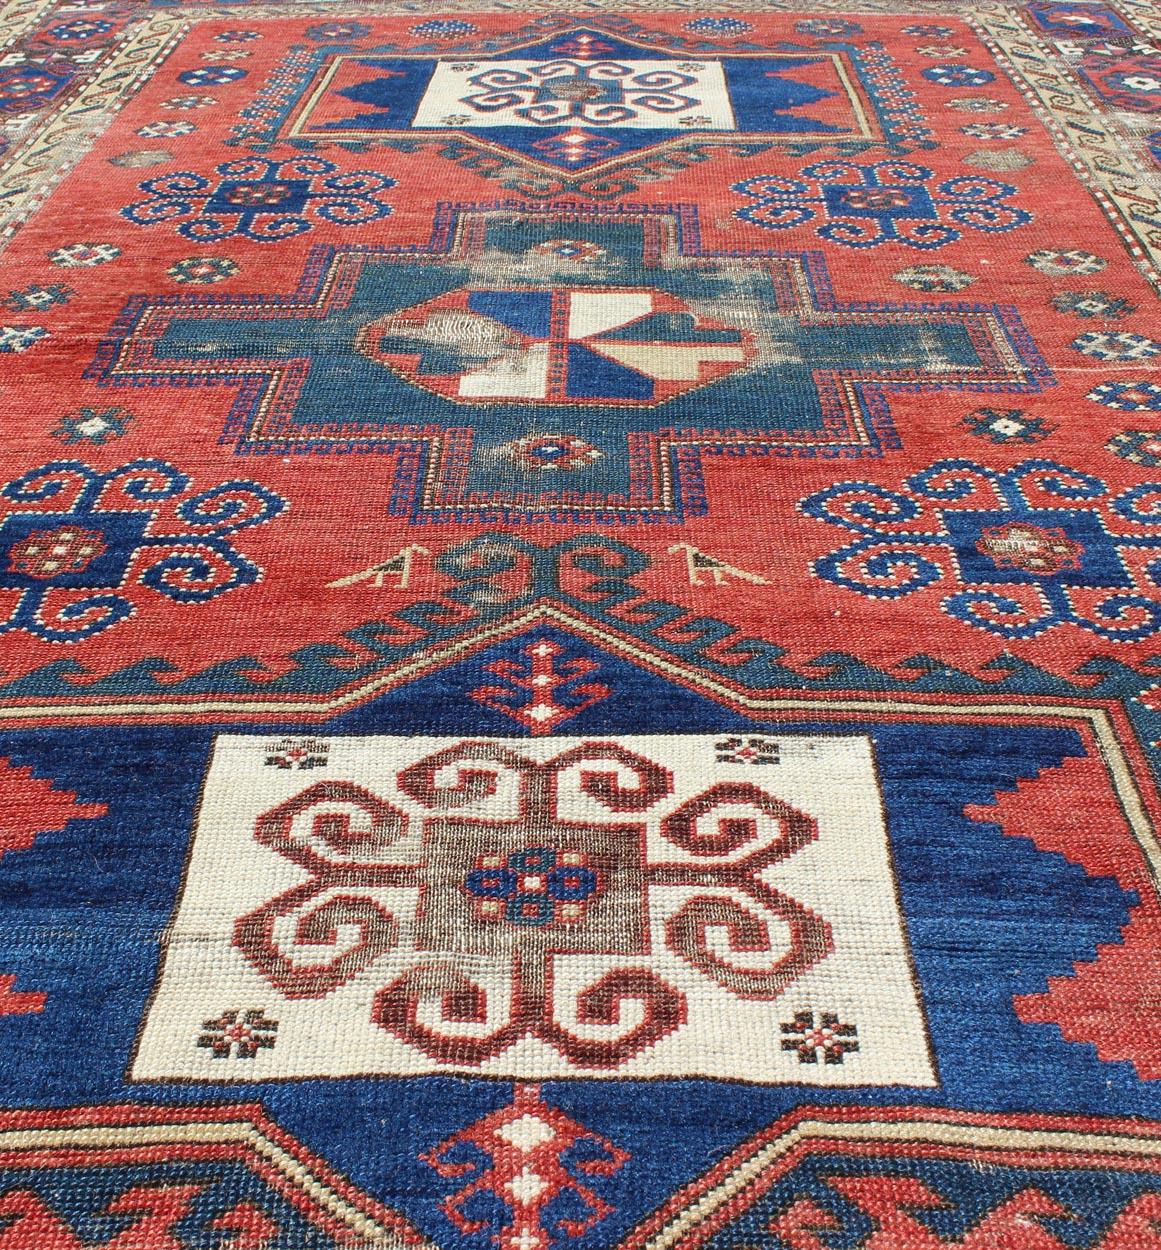 Antique Caucasian Kazak Rug with Tri-Medallion Geometric Design in Red and Blue 7